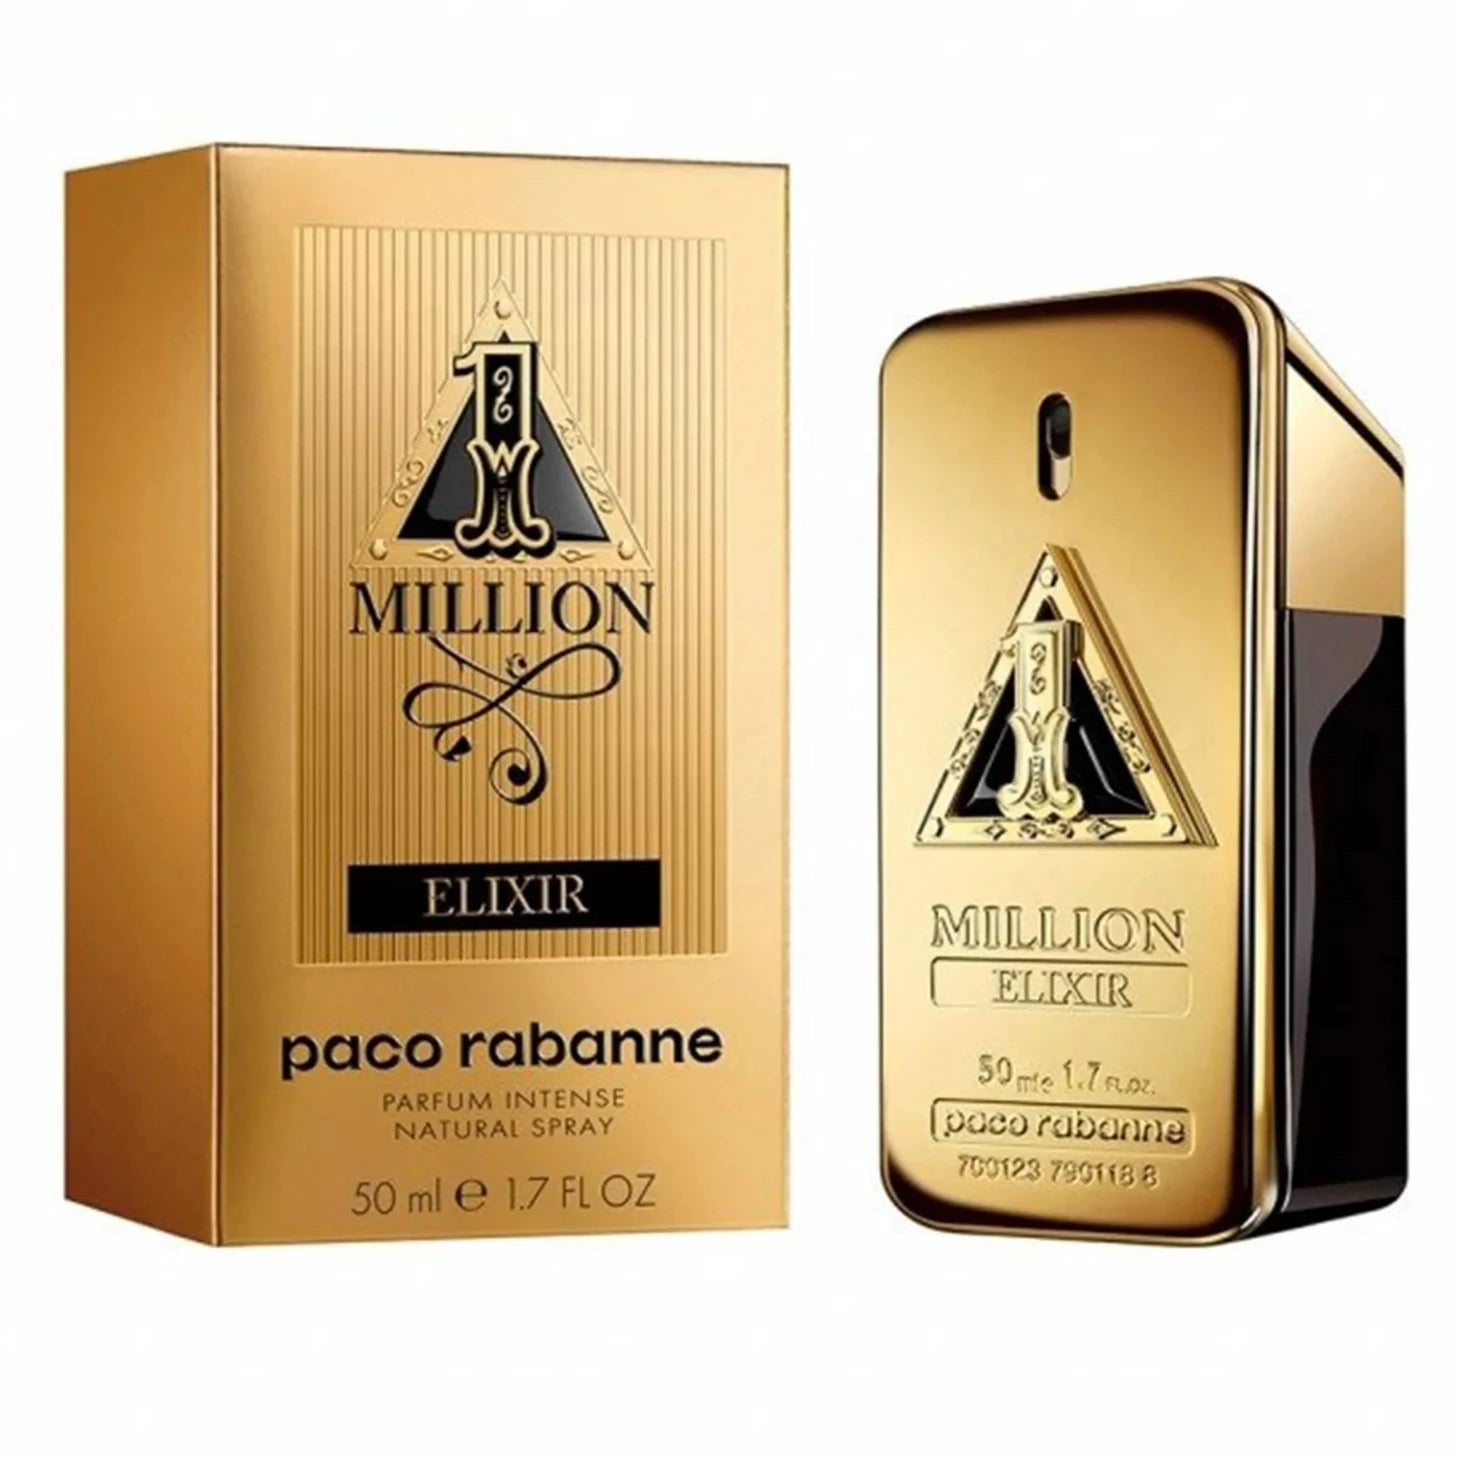 Perfume Paco Rabanne 1 Million Elixir Parfum (M) / 50 ml.